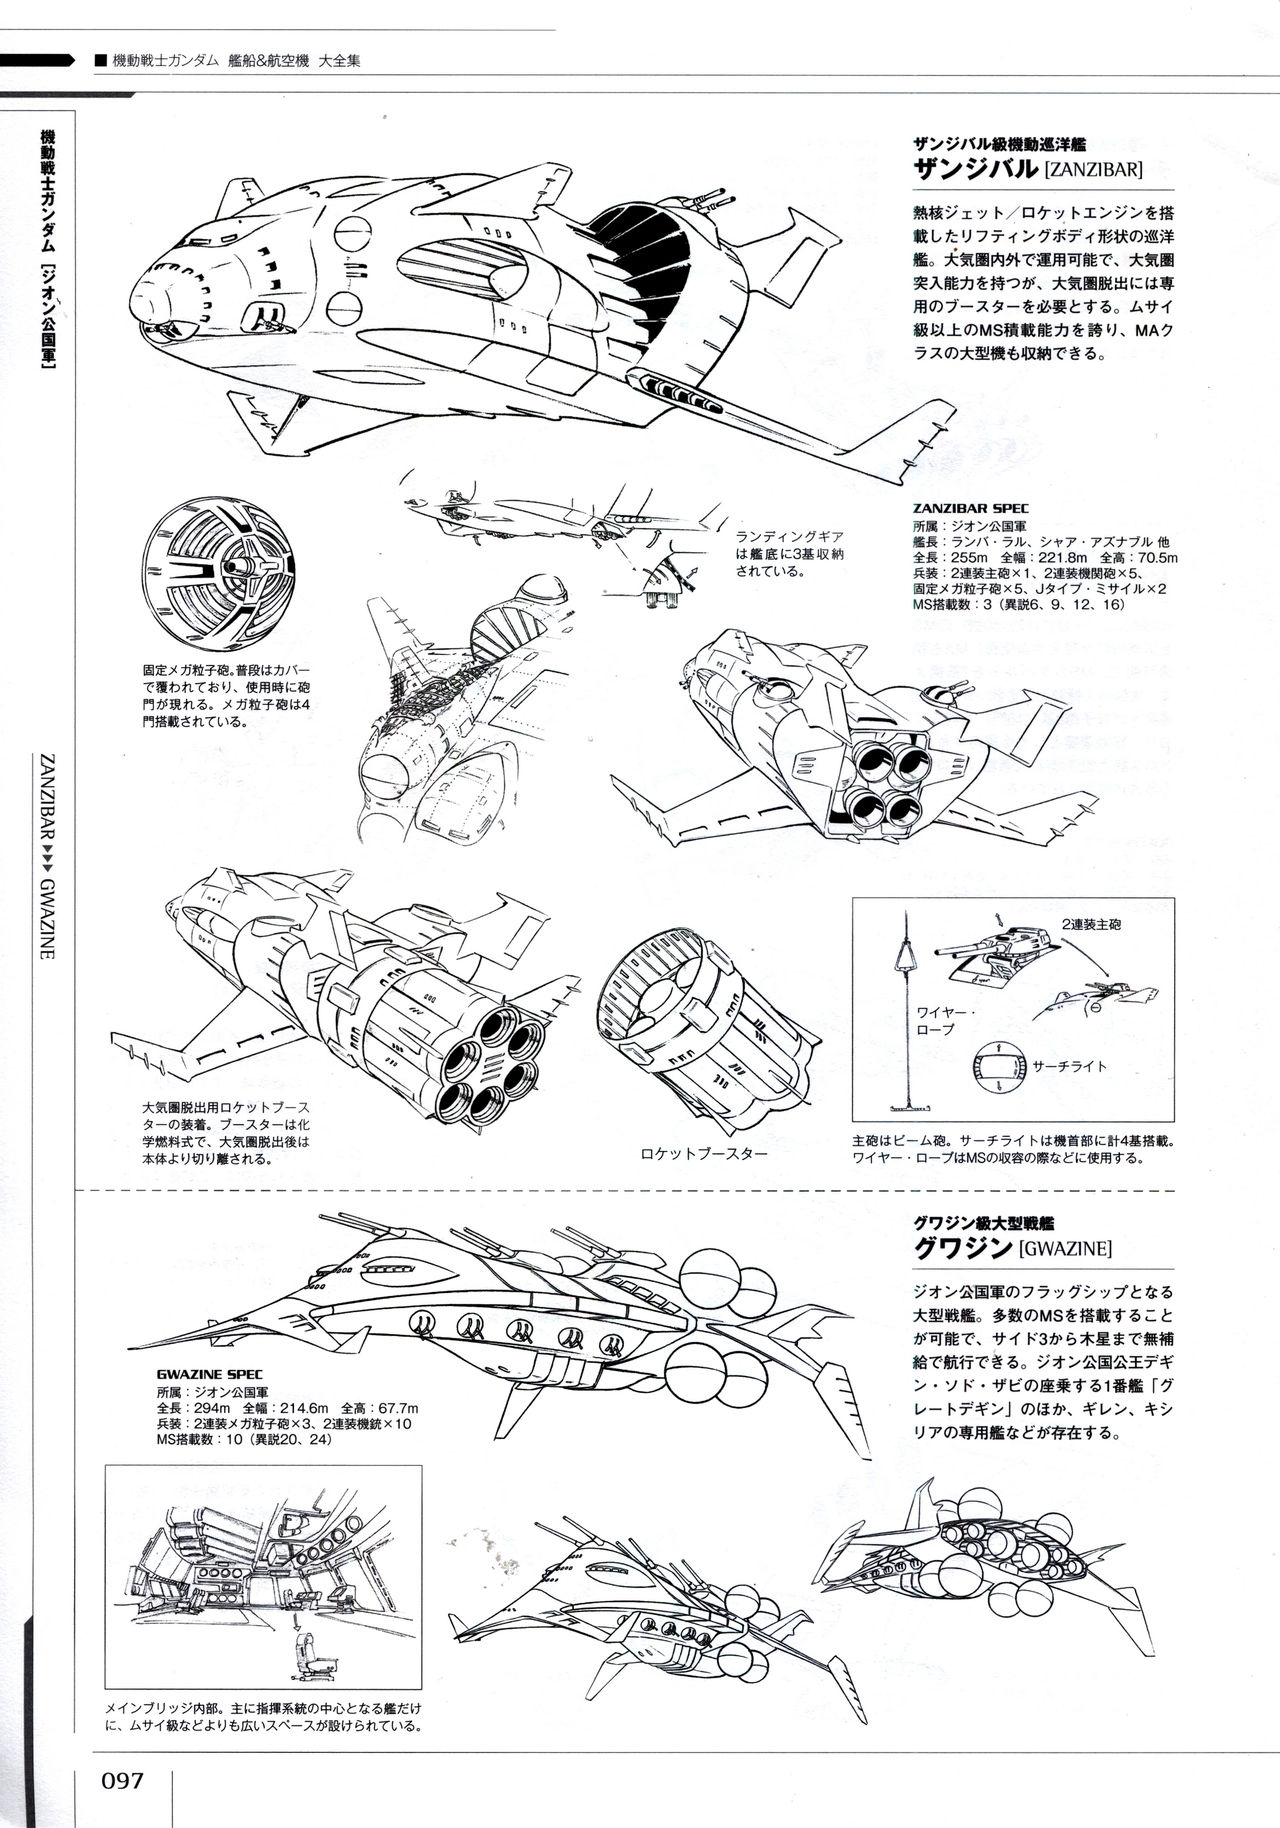 Mobile Suit Gundam - Ship & Aerospace Plane Encyclopedia - Revised Edition 102